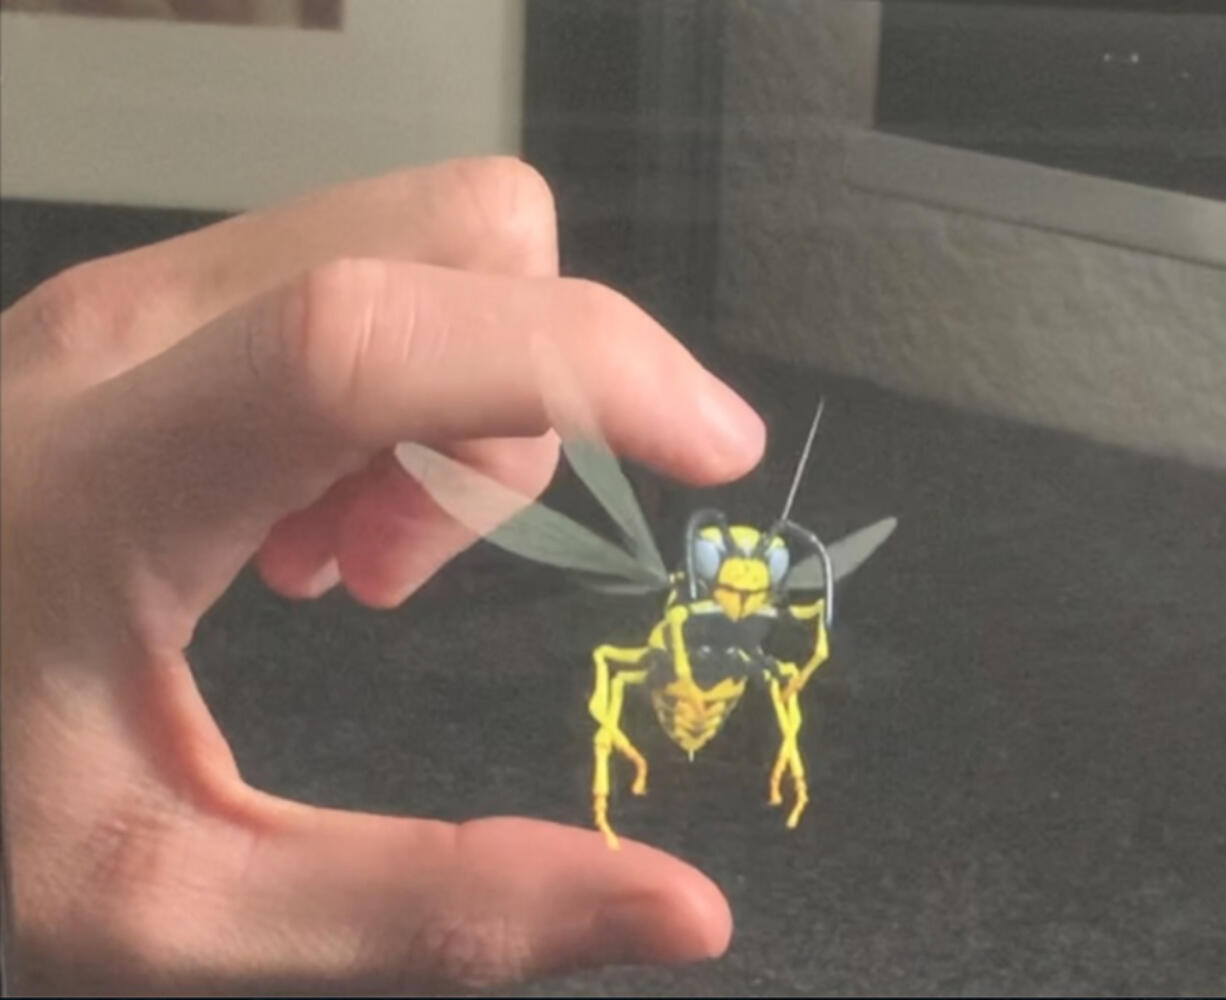 IKIN???s hologram technology displays a wasp.